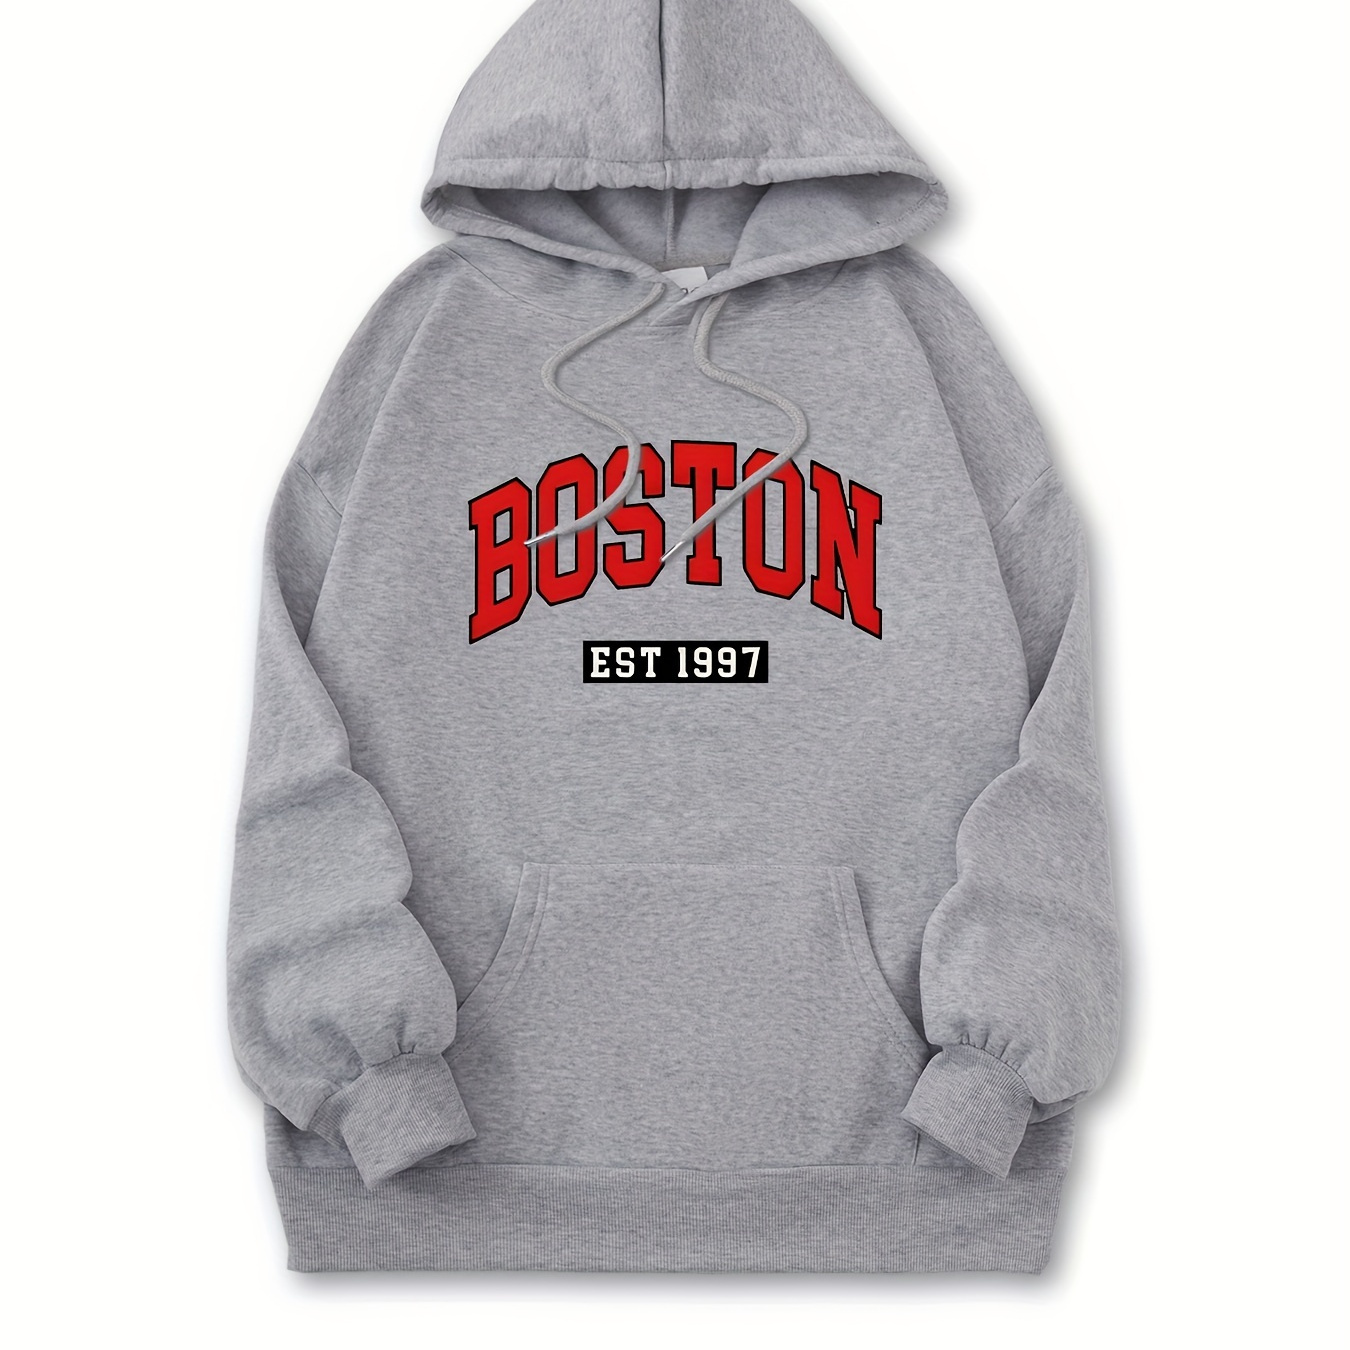 

Boston Letter Print Kangaroo Pocket Drawstring Casual Hoodie, Long Sleeves Sports Hooded Sweatshirt, Women's Activewear